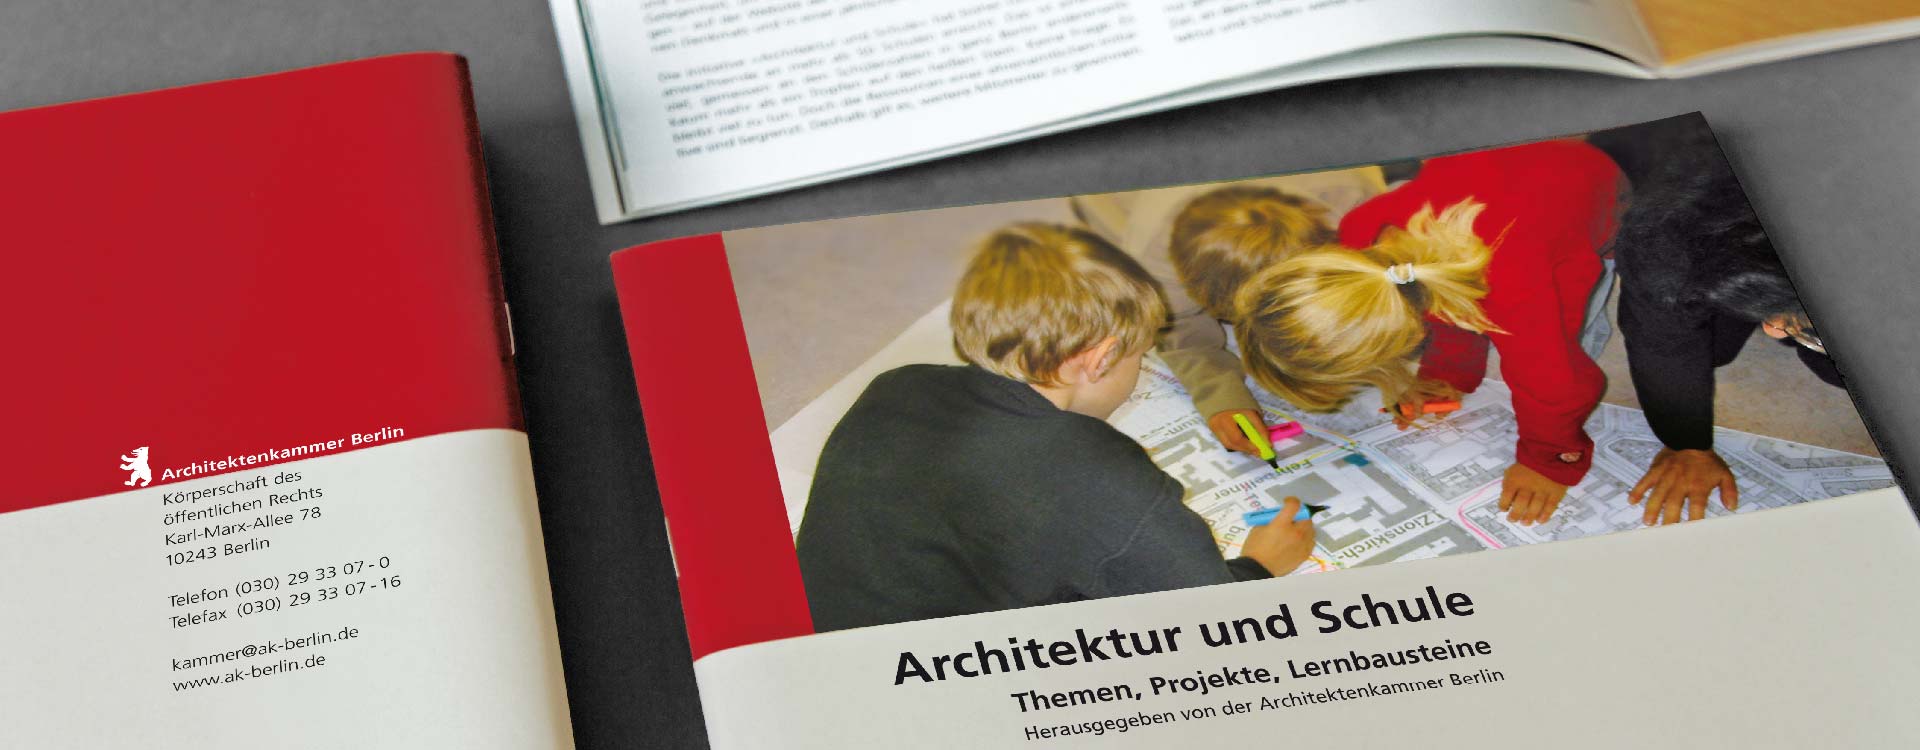 Front cover the brochure Architektur und Schule for the Chamber of Architects Berlin; Design: Kattrin Richter | Graphic Design Studio